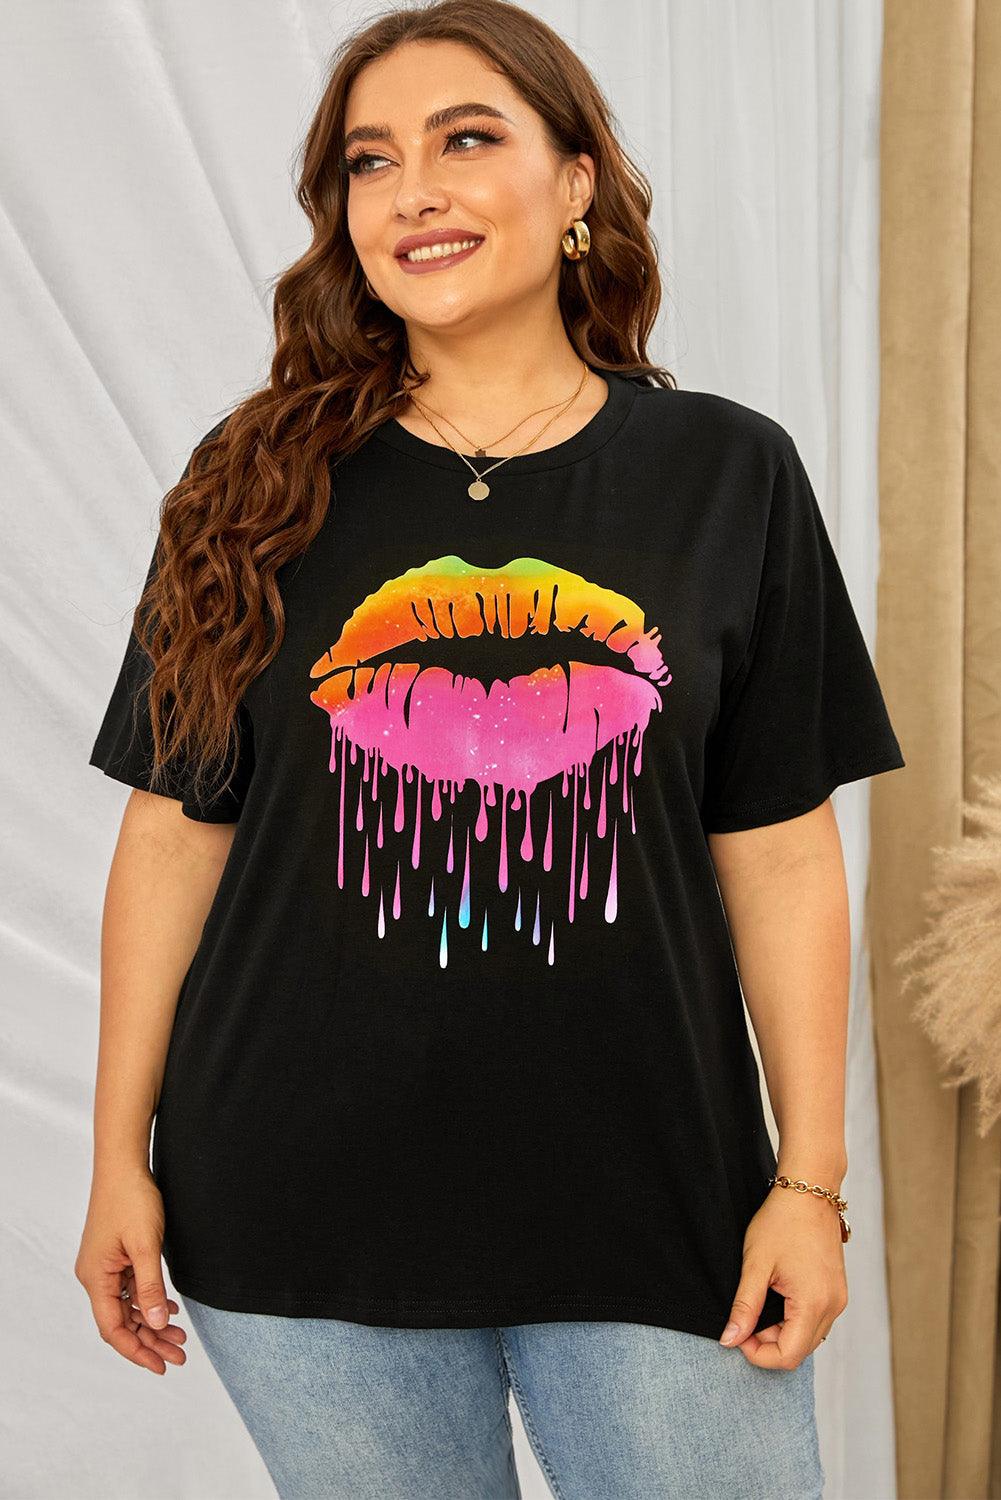 Women's Shirts - Plus Plus Hot Lips Graphic T-Shirt